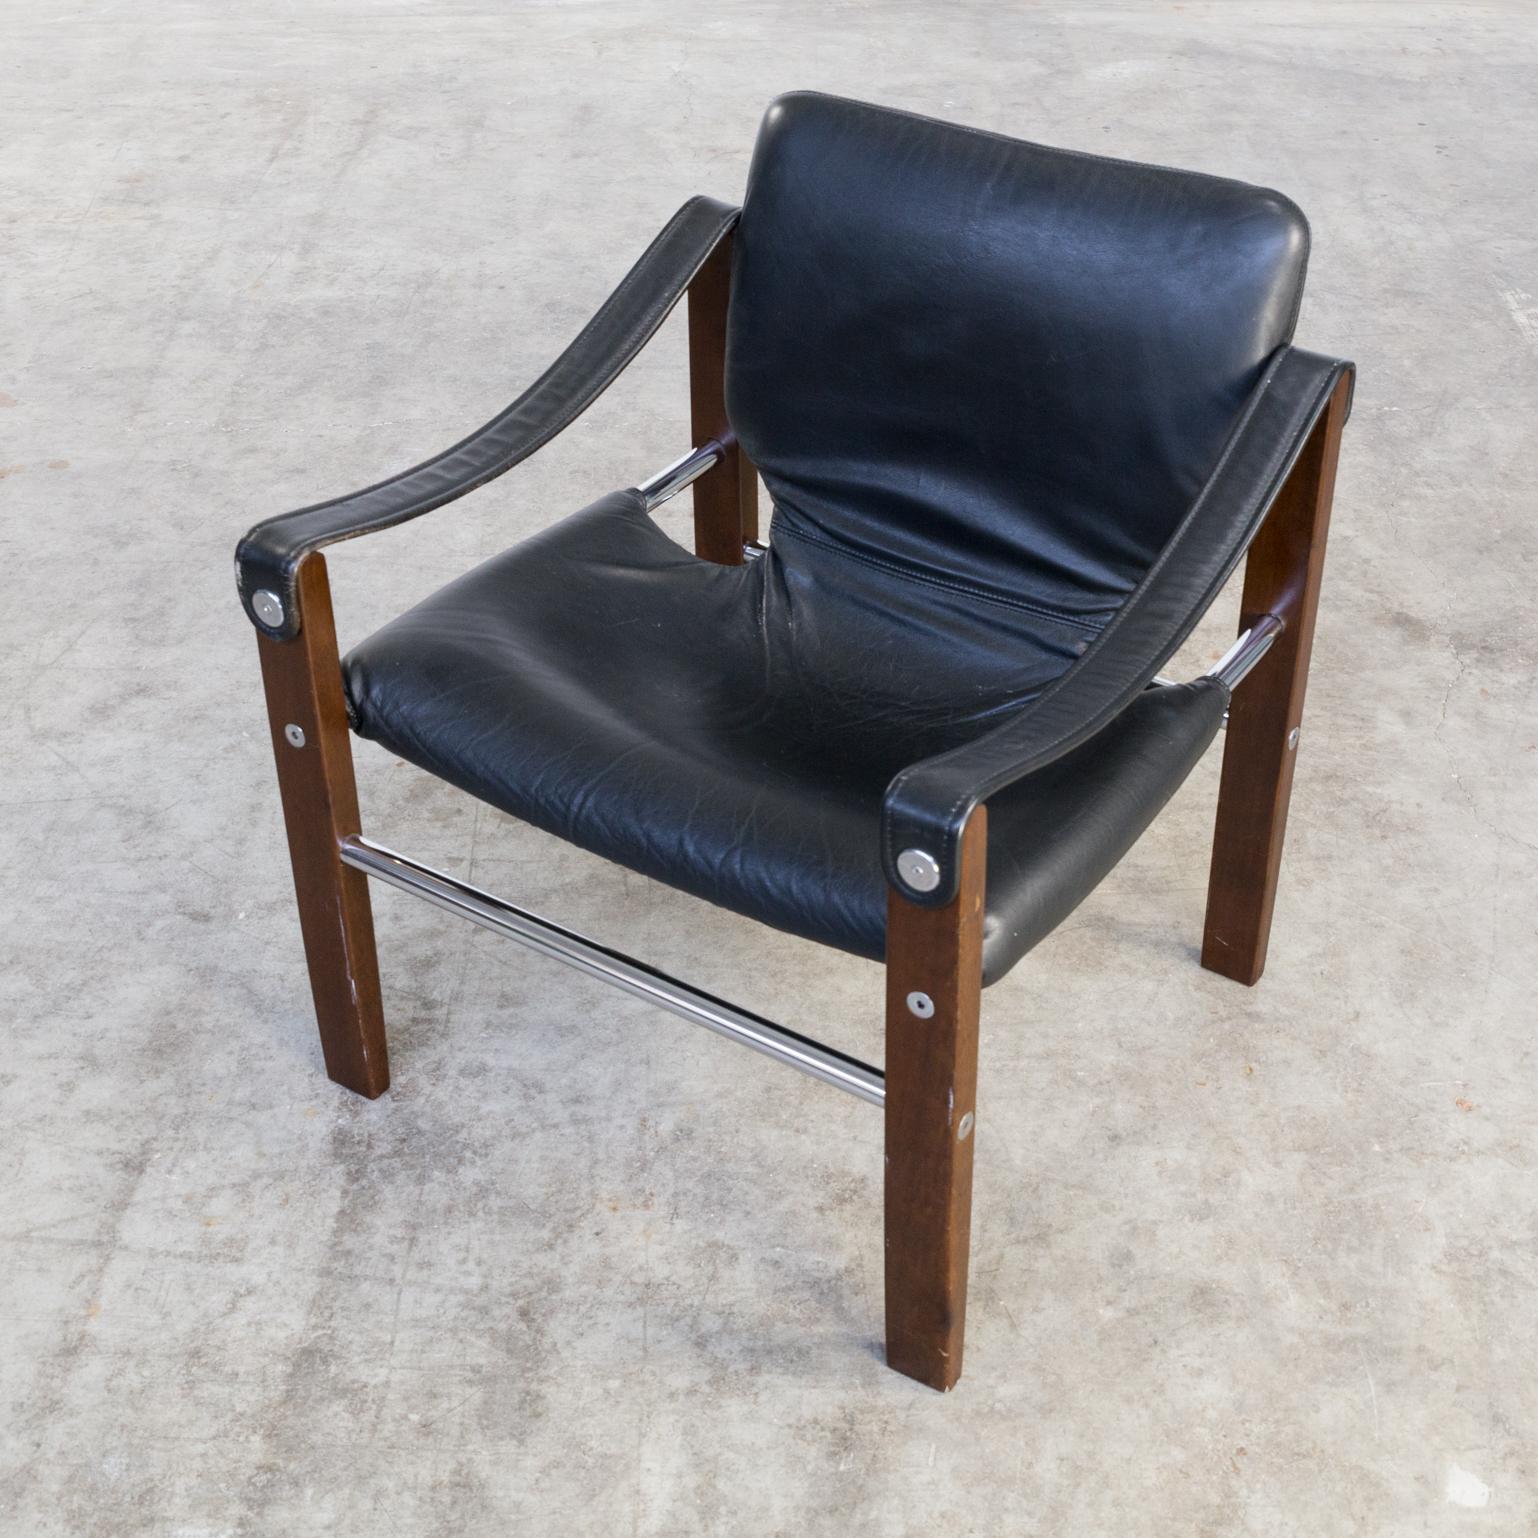 1970s Maurice Burke ‘Chelsea’ Black Leather Fauteuil/Safari Chair for Pozza Set For Sale 1